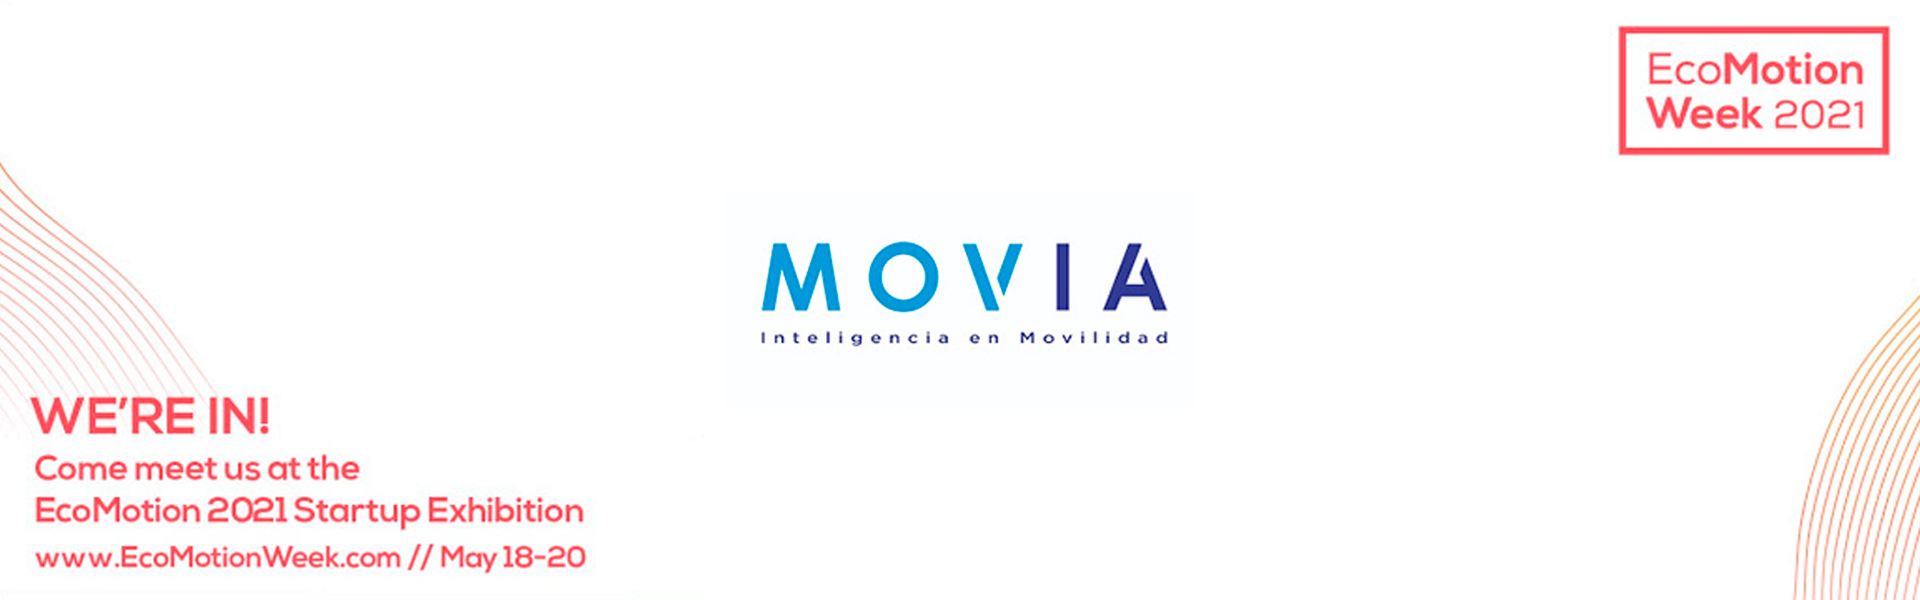 MOVIA forma parte de EcoMotion 2021 thumbnail